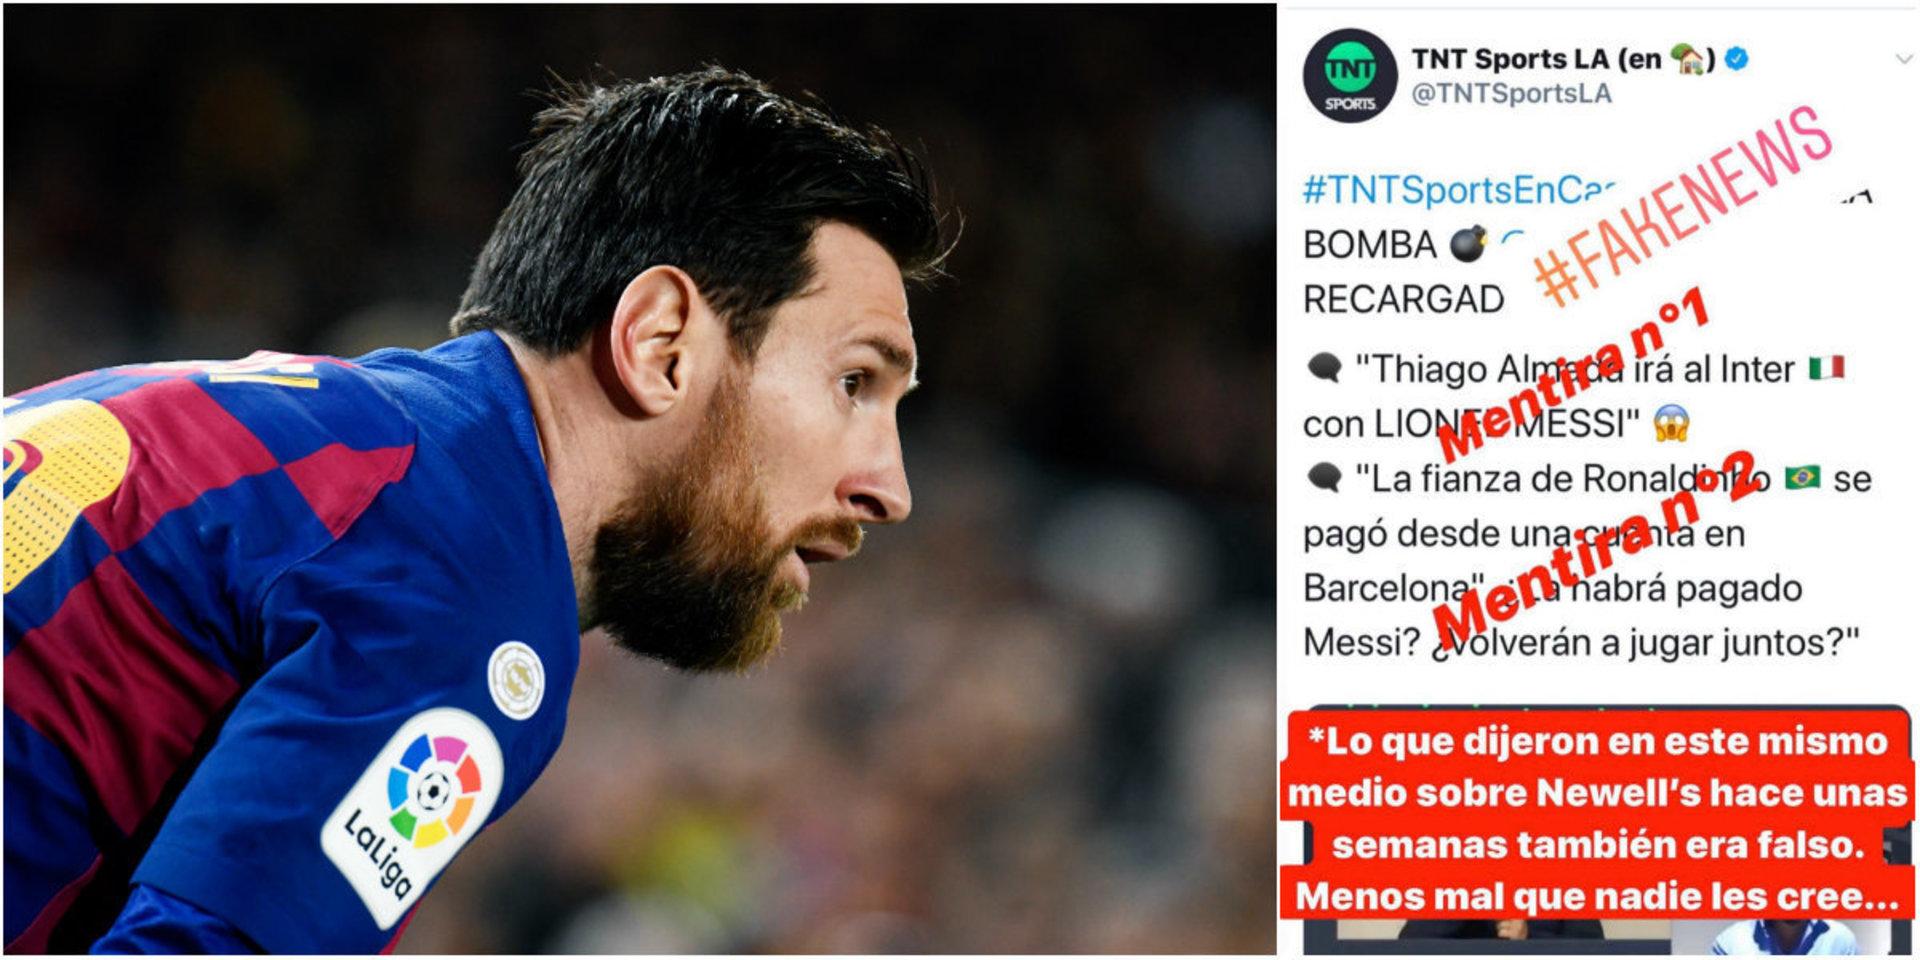 Lionel Messi slog tillbaka mot flyttrykten på Instagram.